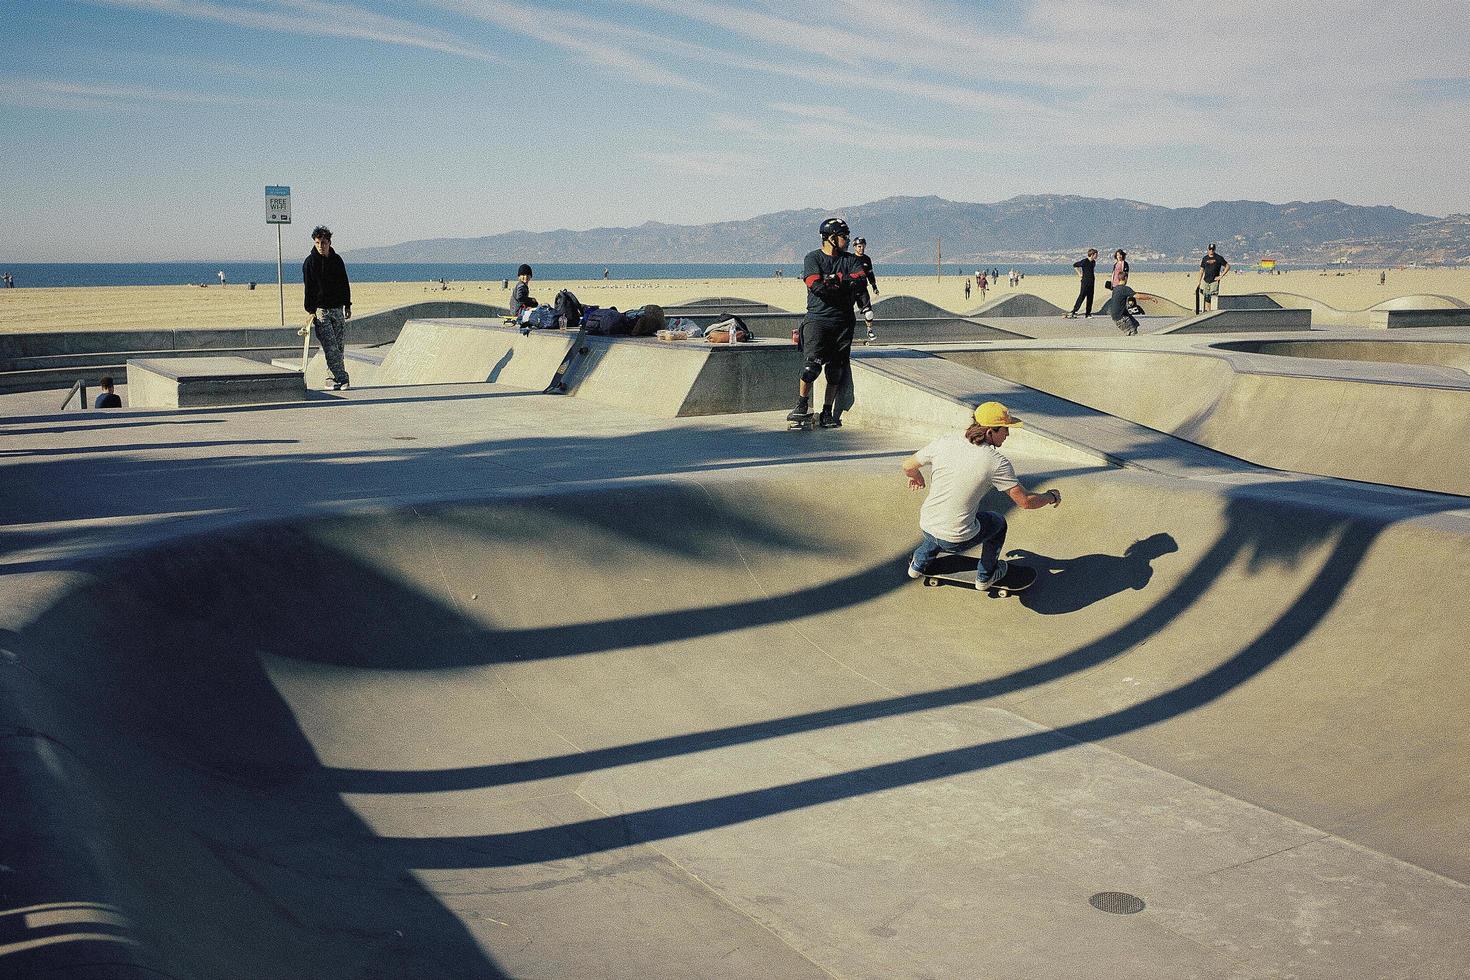 Santa Barbara, CA, 2020 - Skaters in a park photo